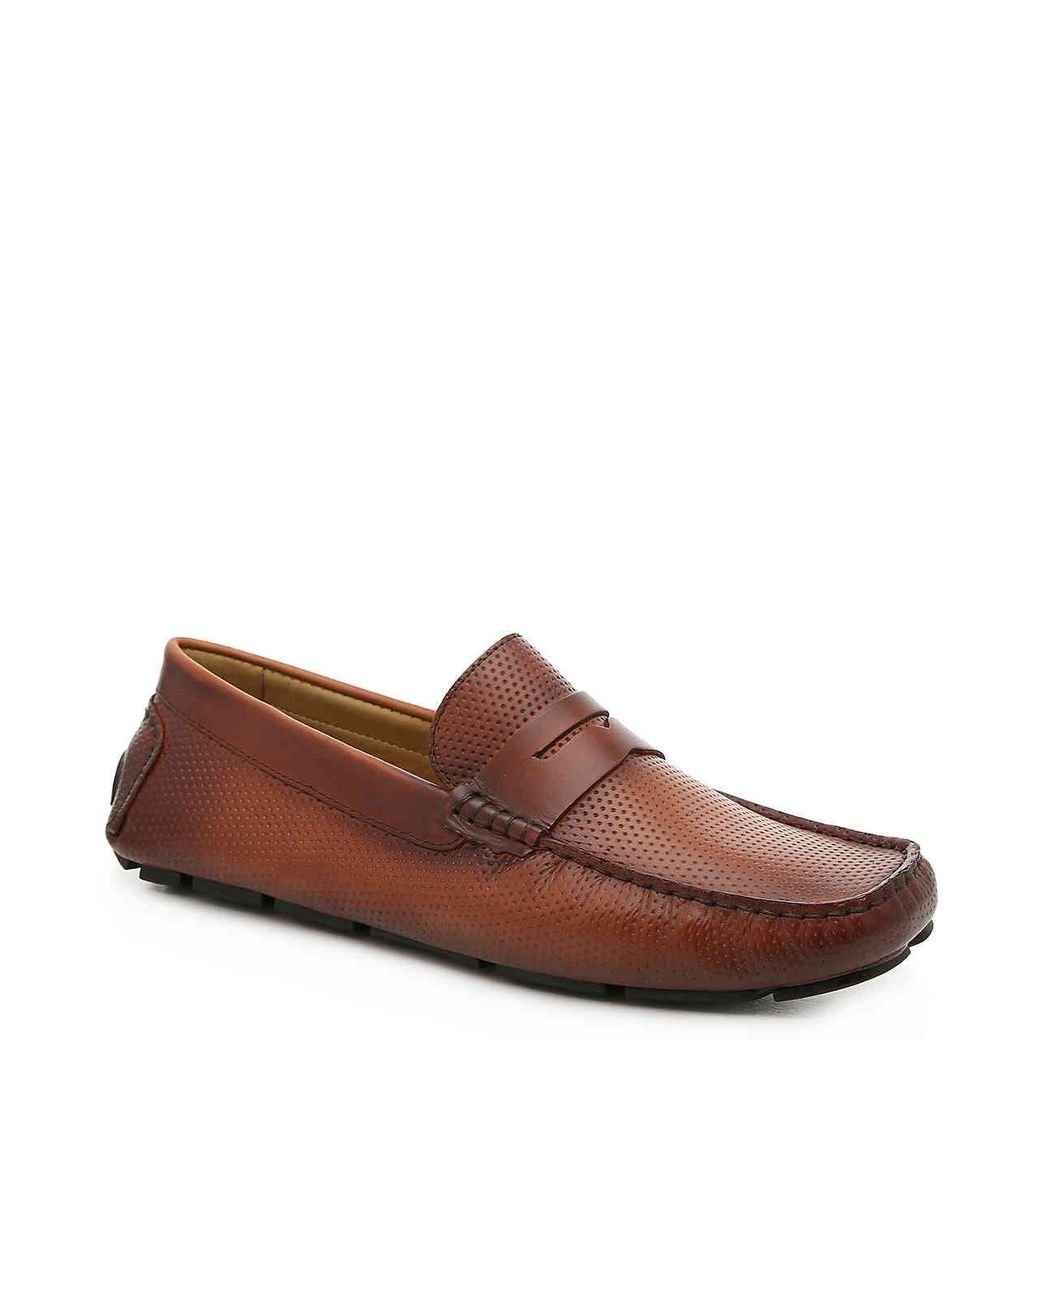 mercanti fiorentini leather loafer